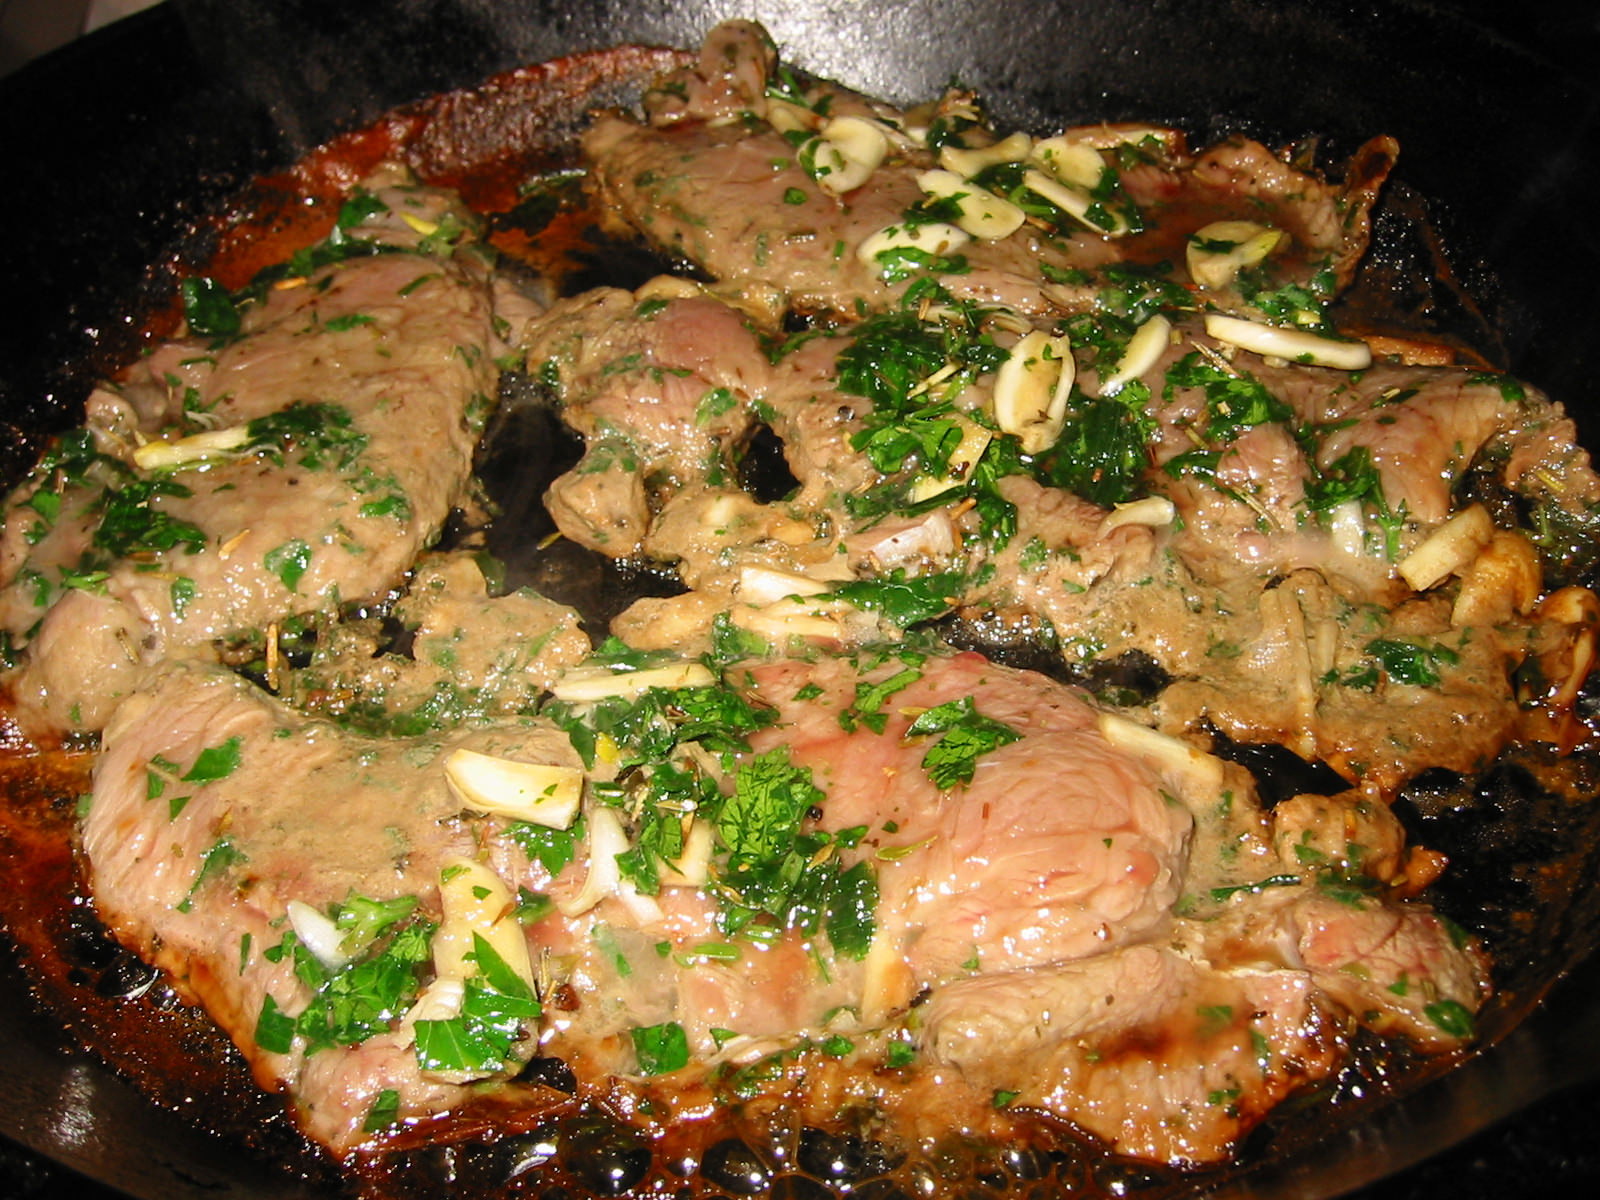 Pan frying marinated veal steaks